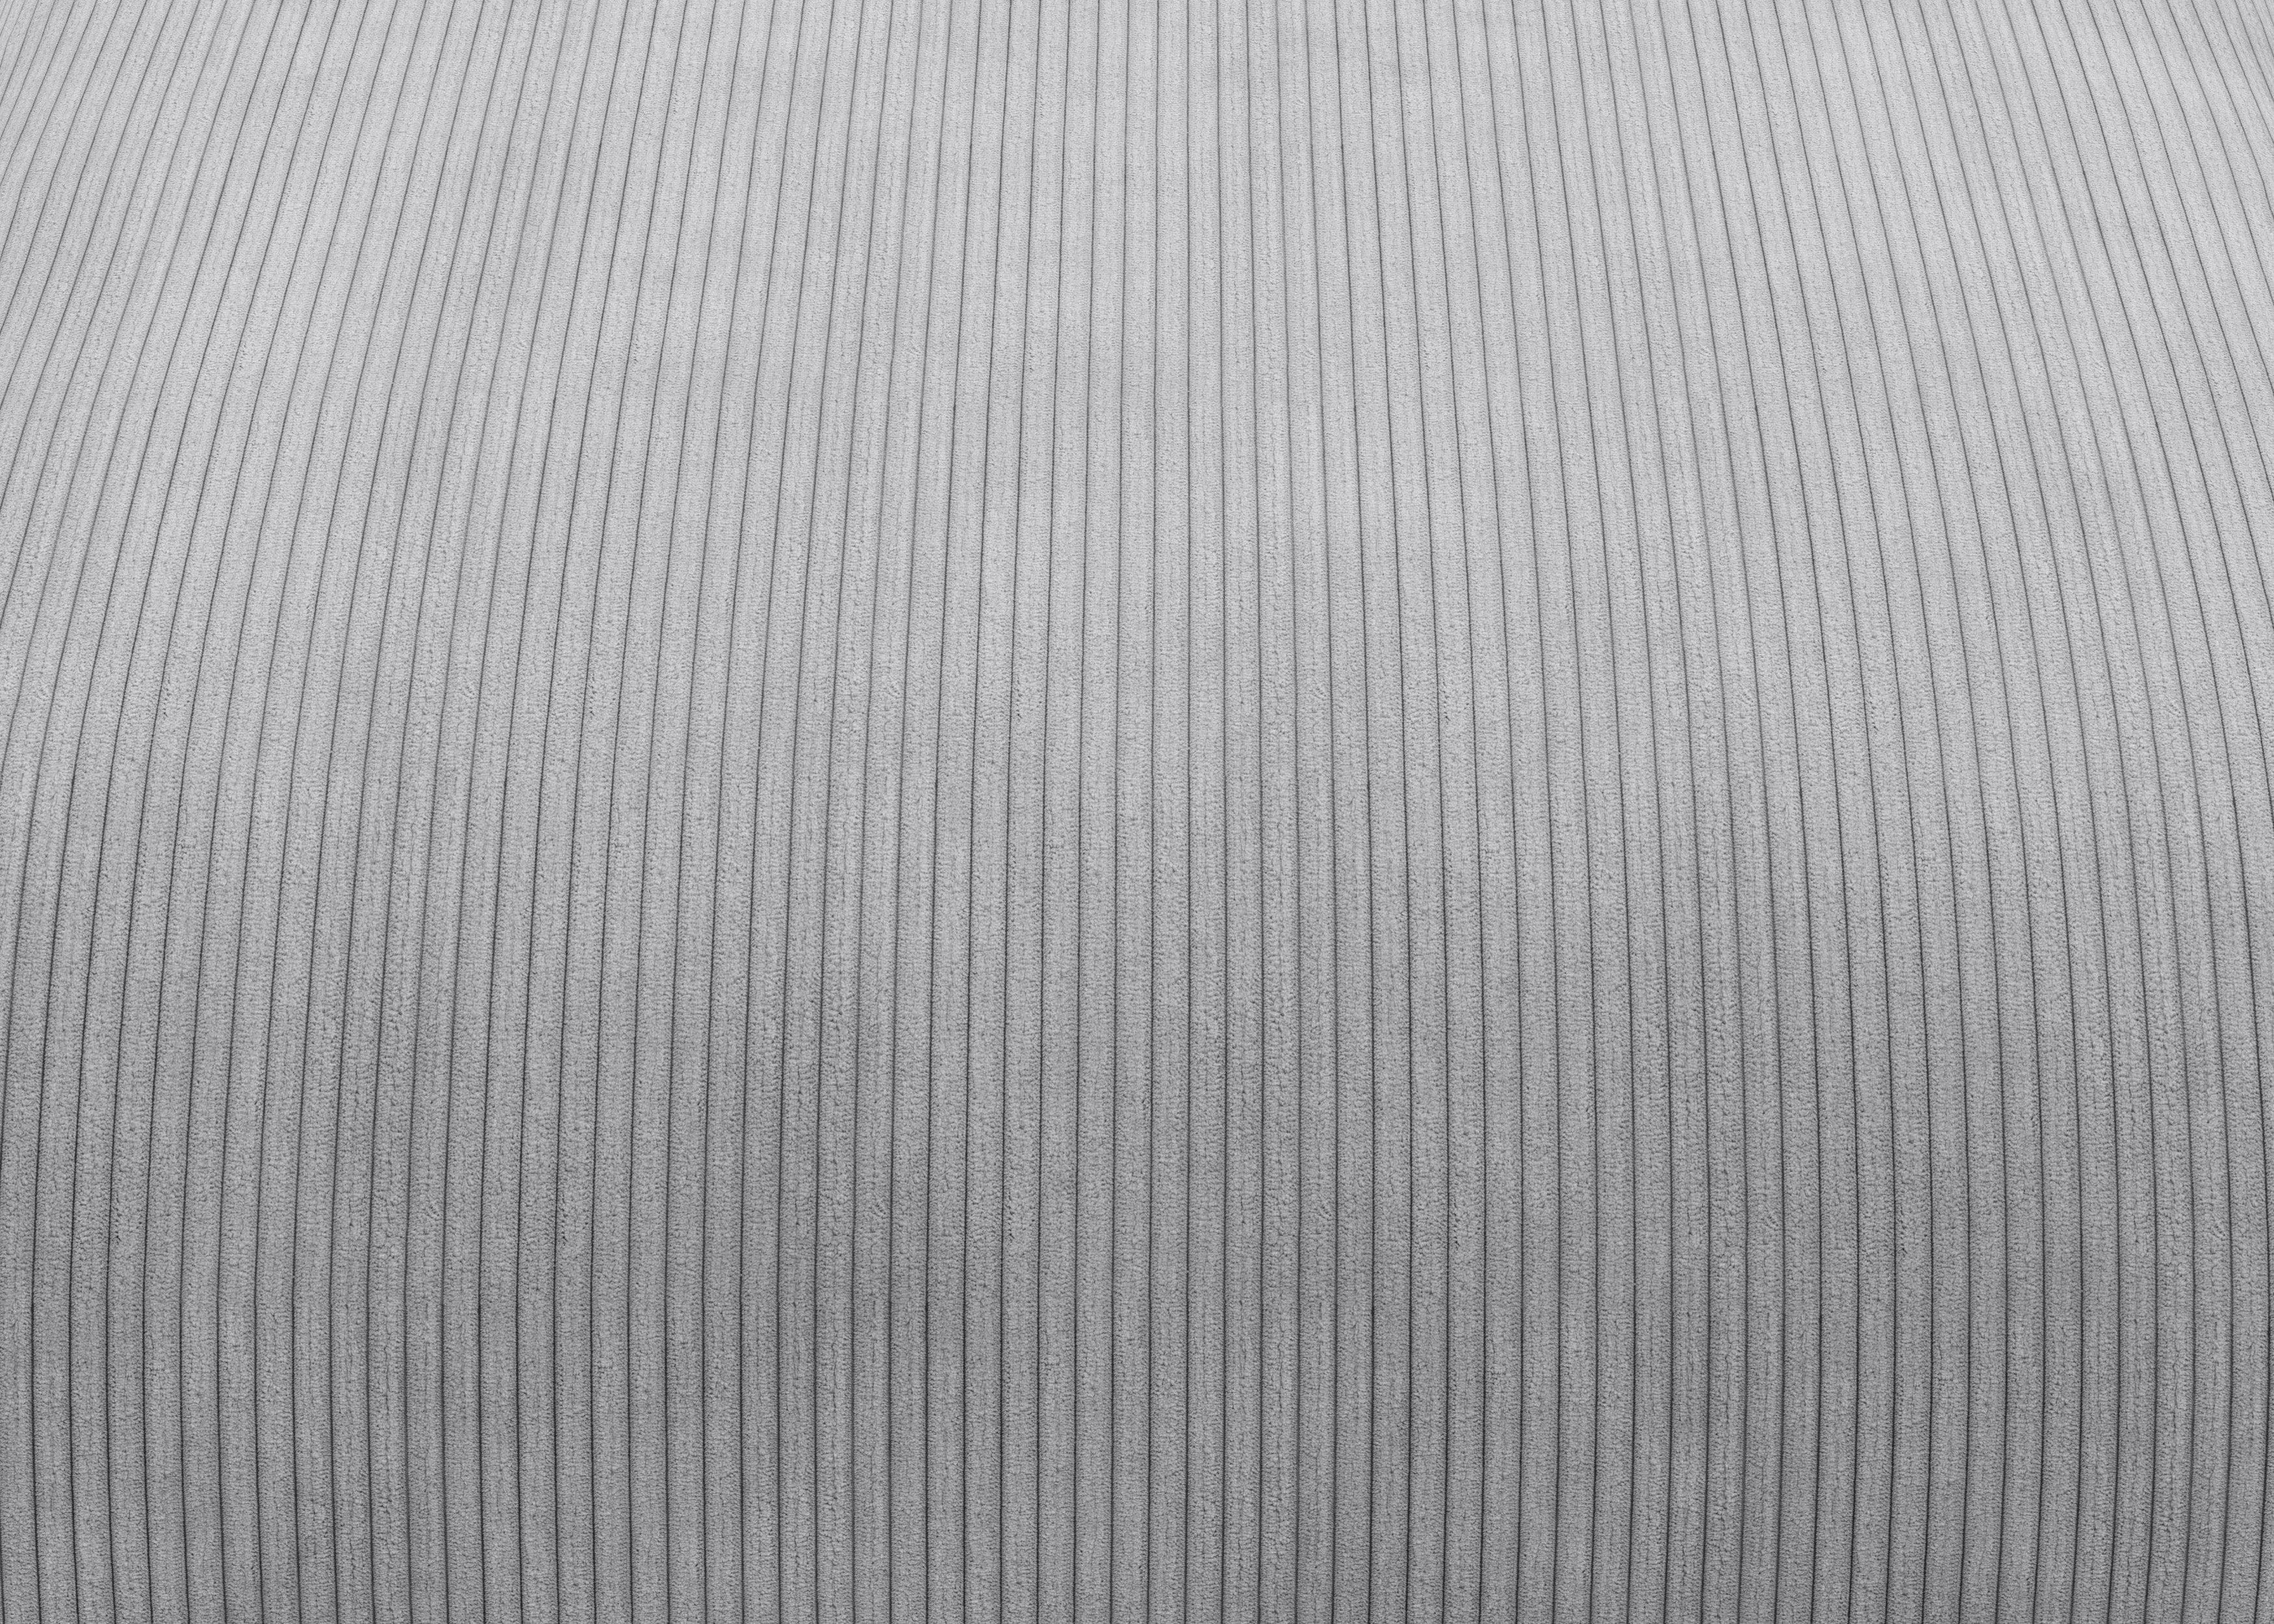 vetsak®-Sofa Daybed L Cord Velours light grey